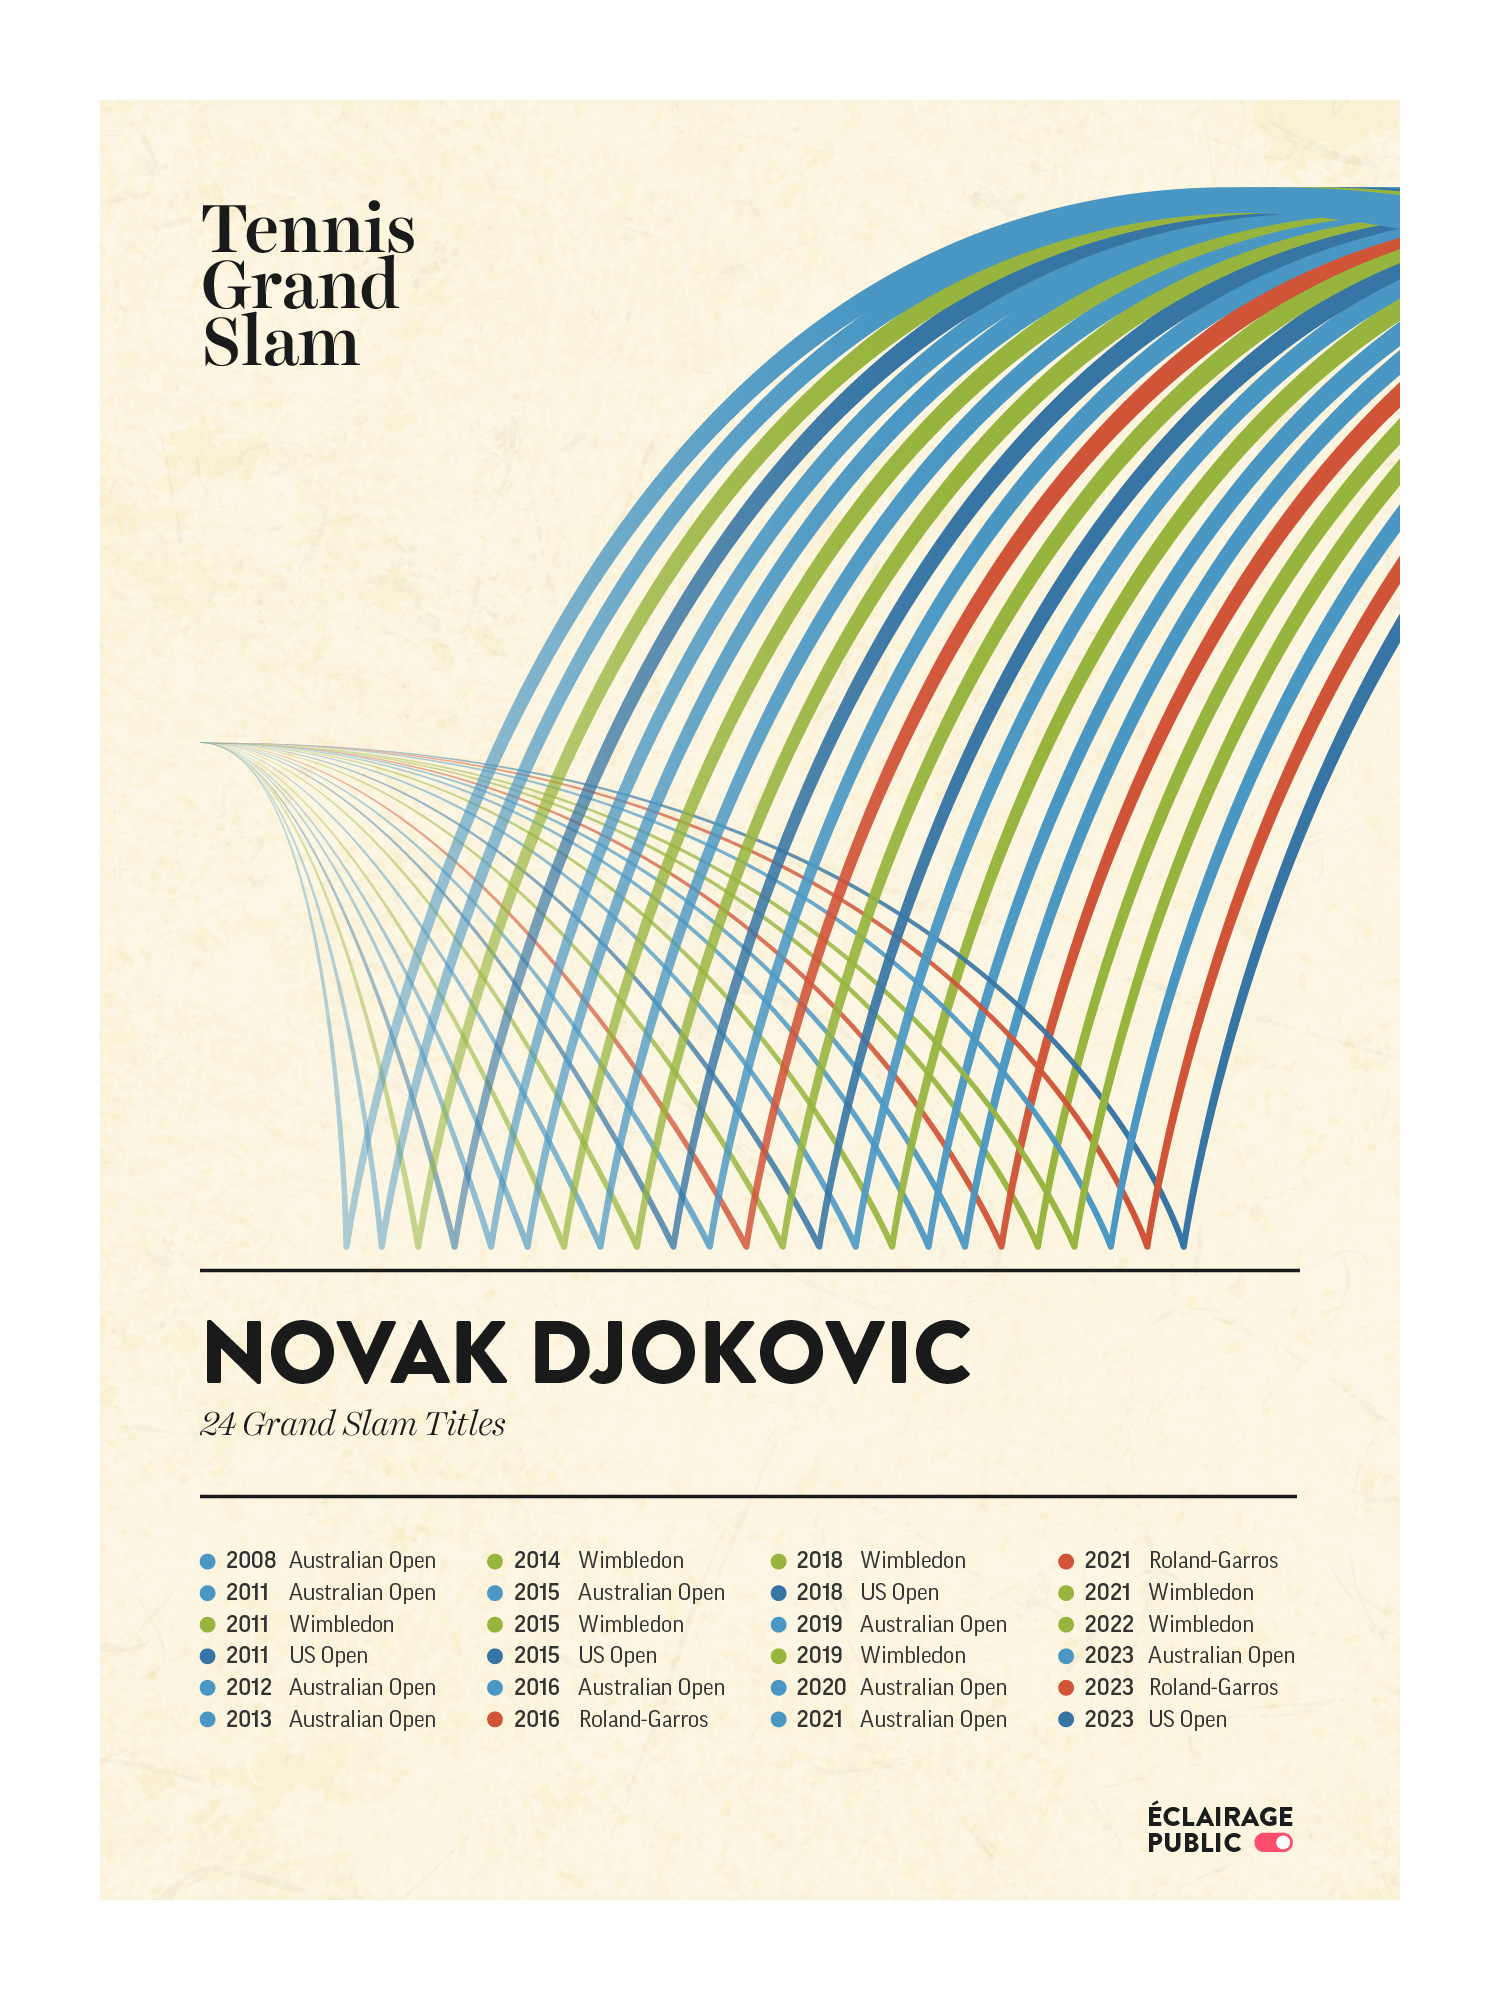 Tennis-Grand-Slam-Novak-Djokovic-ECLAIRAGE-PUBLIC